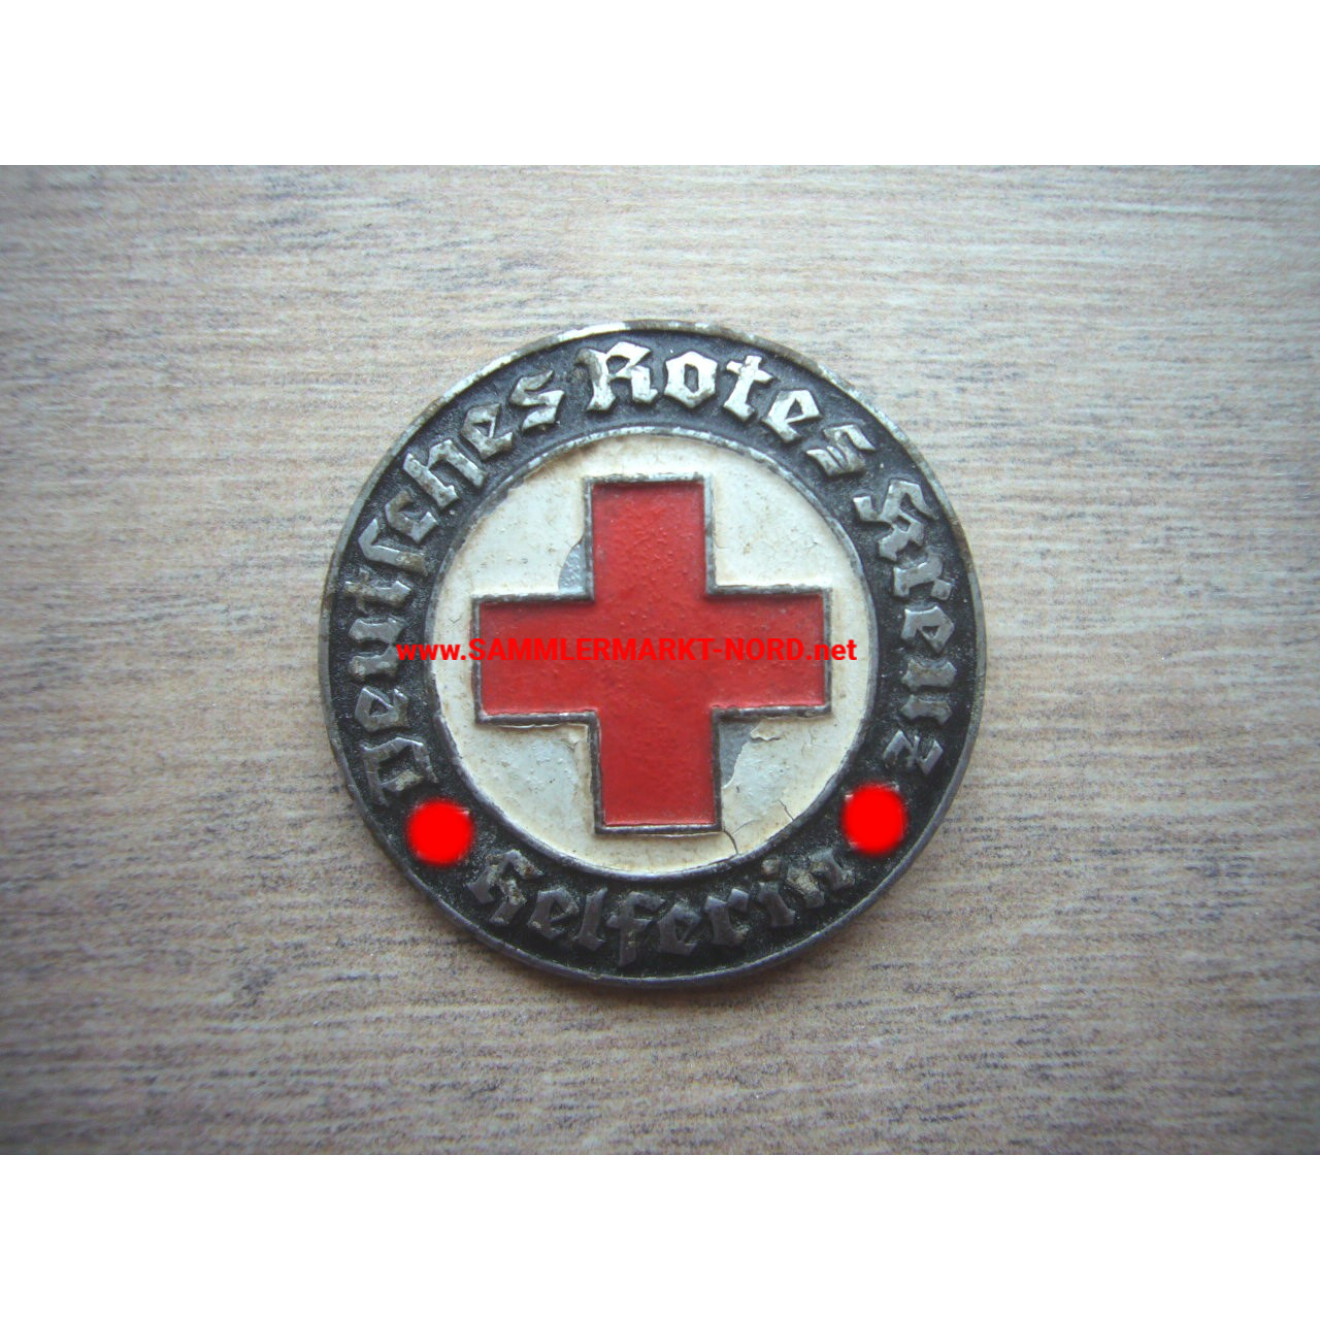 DRK Red Cross - Brooch "Helferin" - Lacquered version